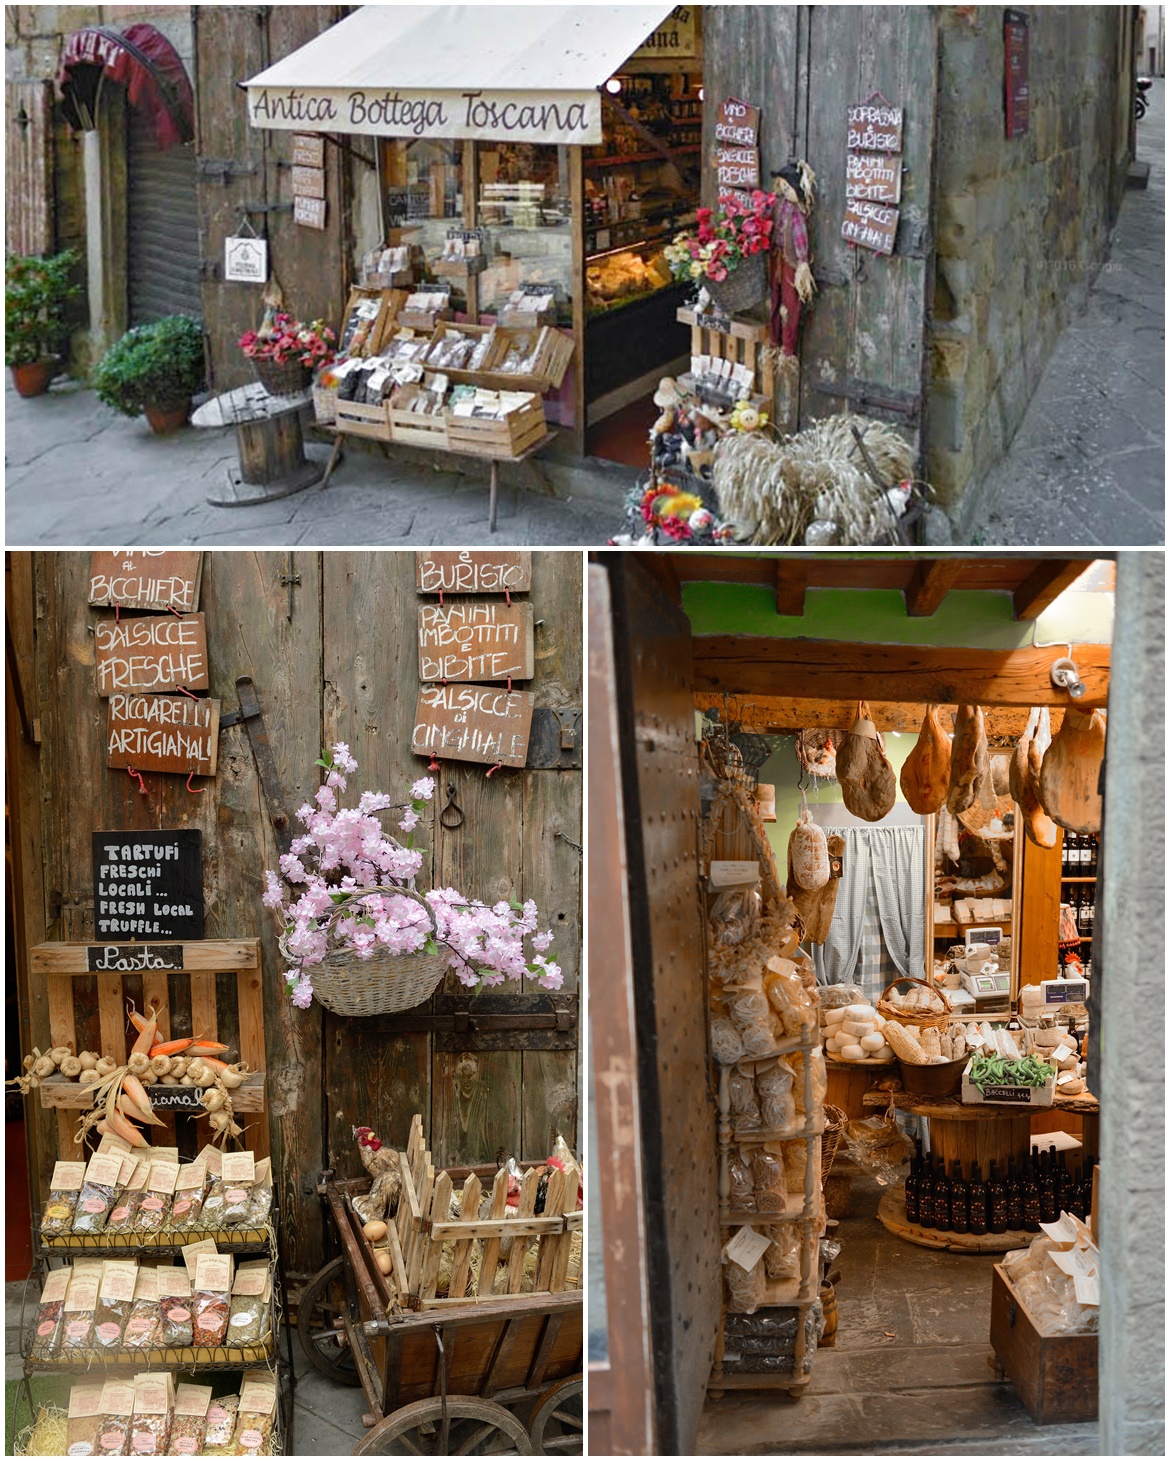 Arezzo Antica Bottega